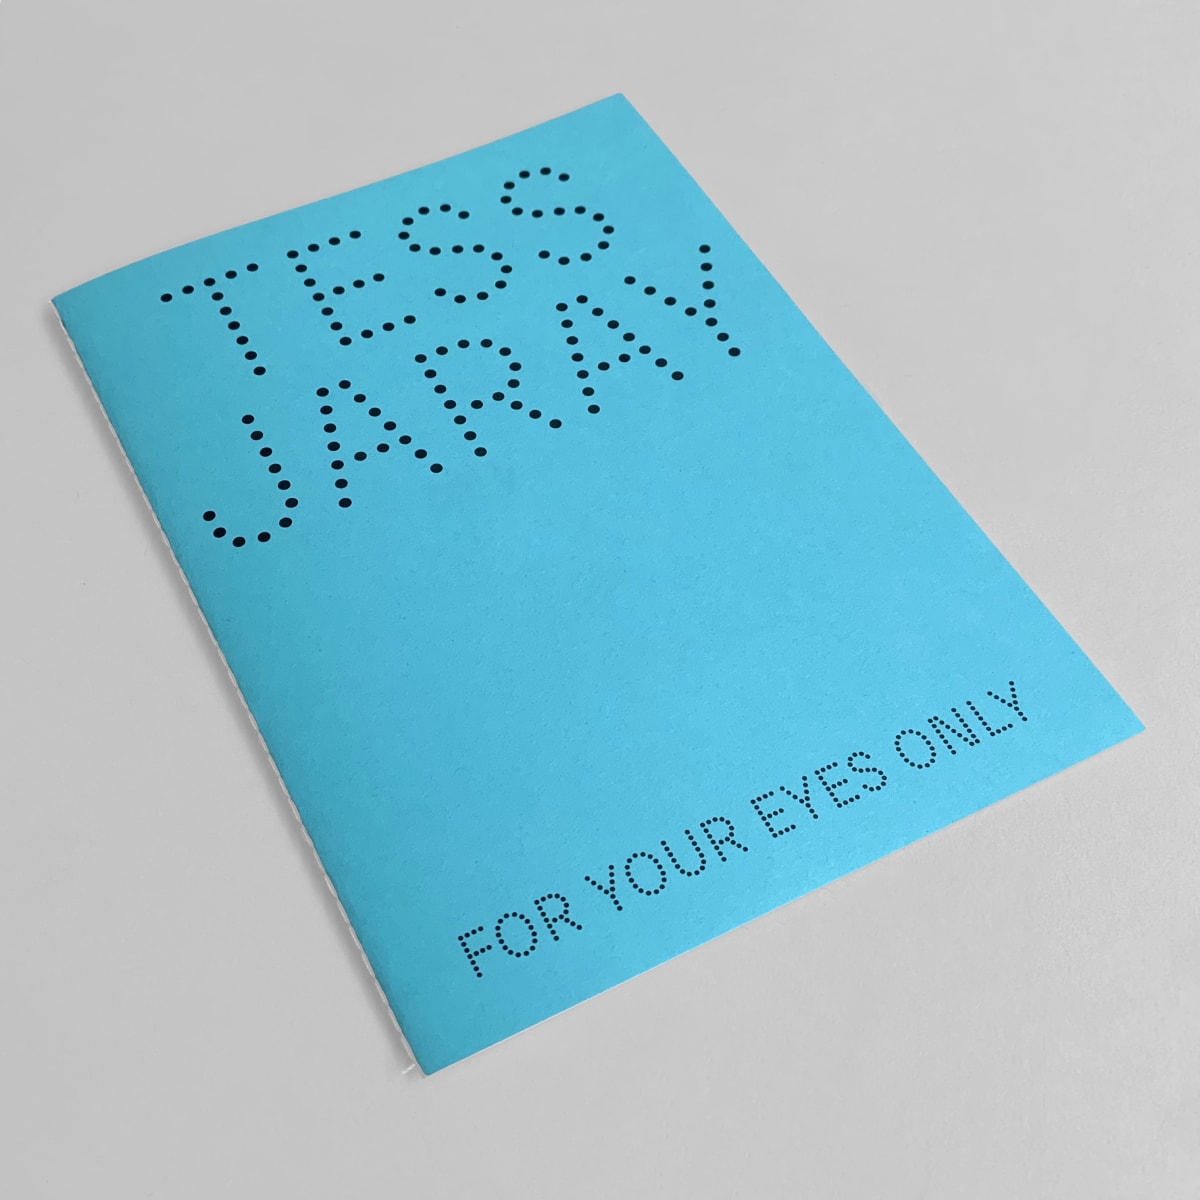 Tess Jaray